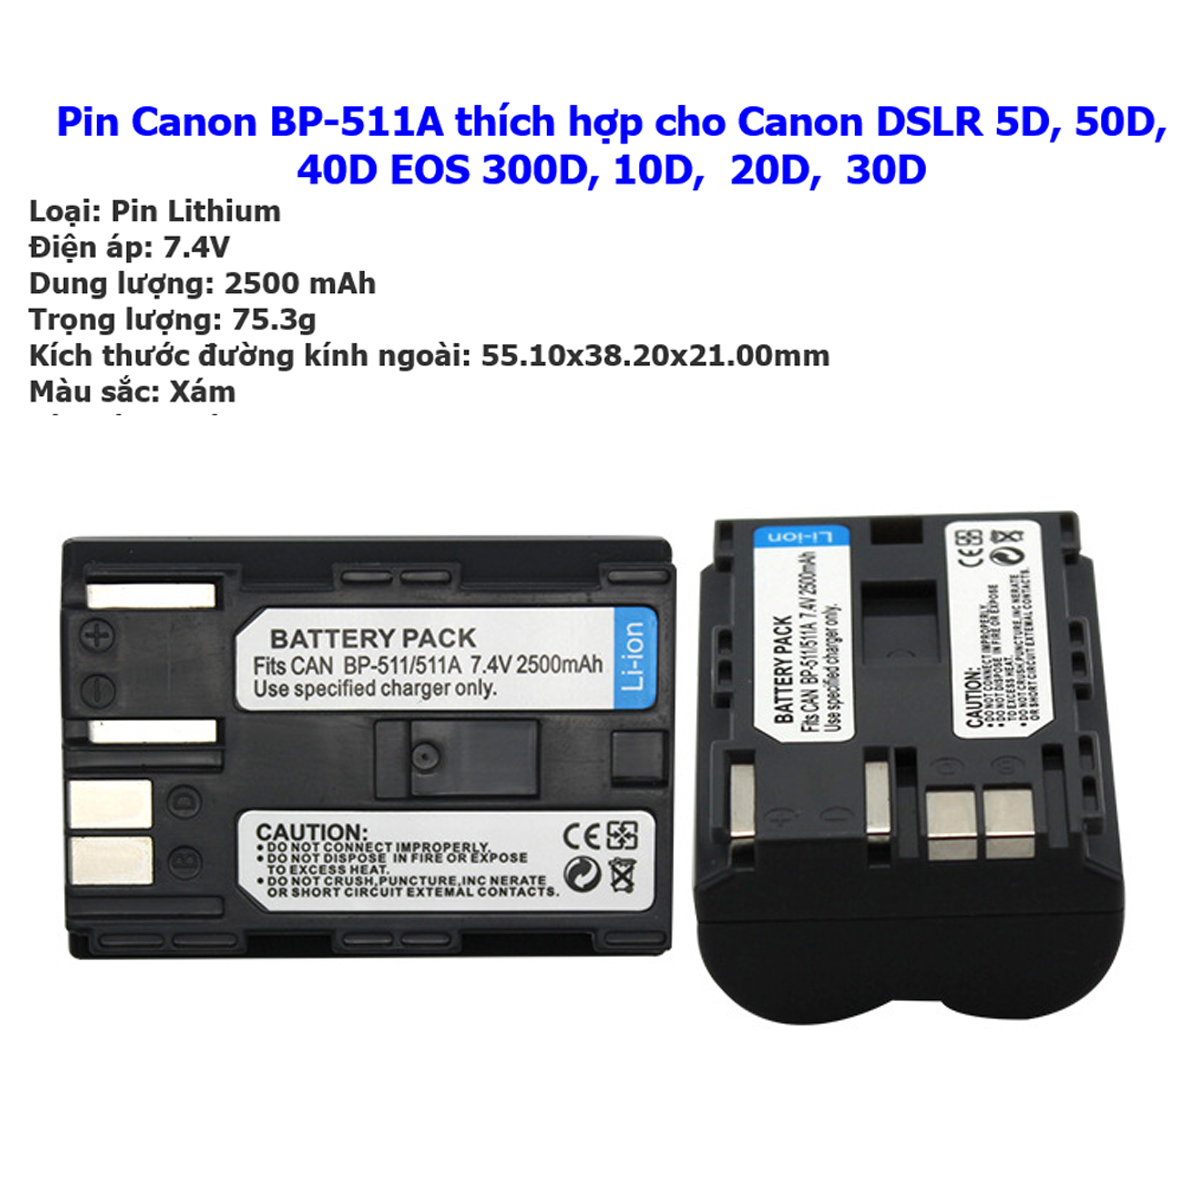 Pin for BP-511A dung lượng cao 2500mAh dành cho máy ảnh Canon 10D, 20D, 30D, 40D, 50D, 5D, 300D